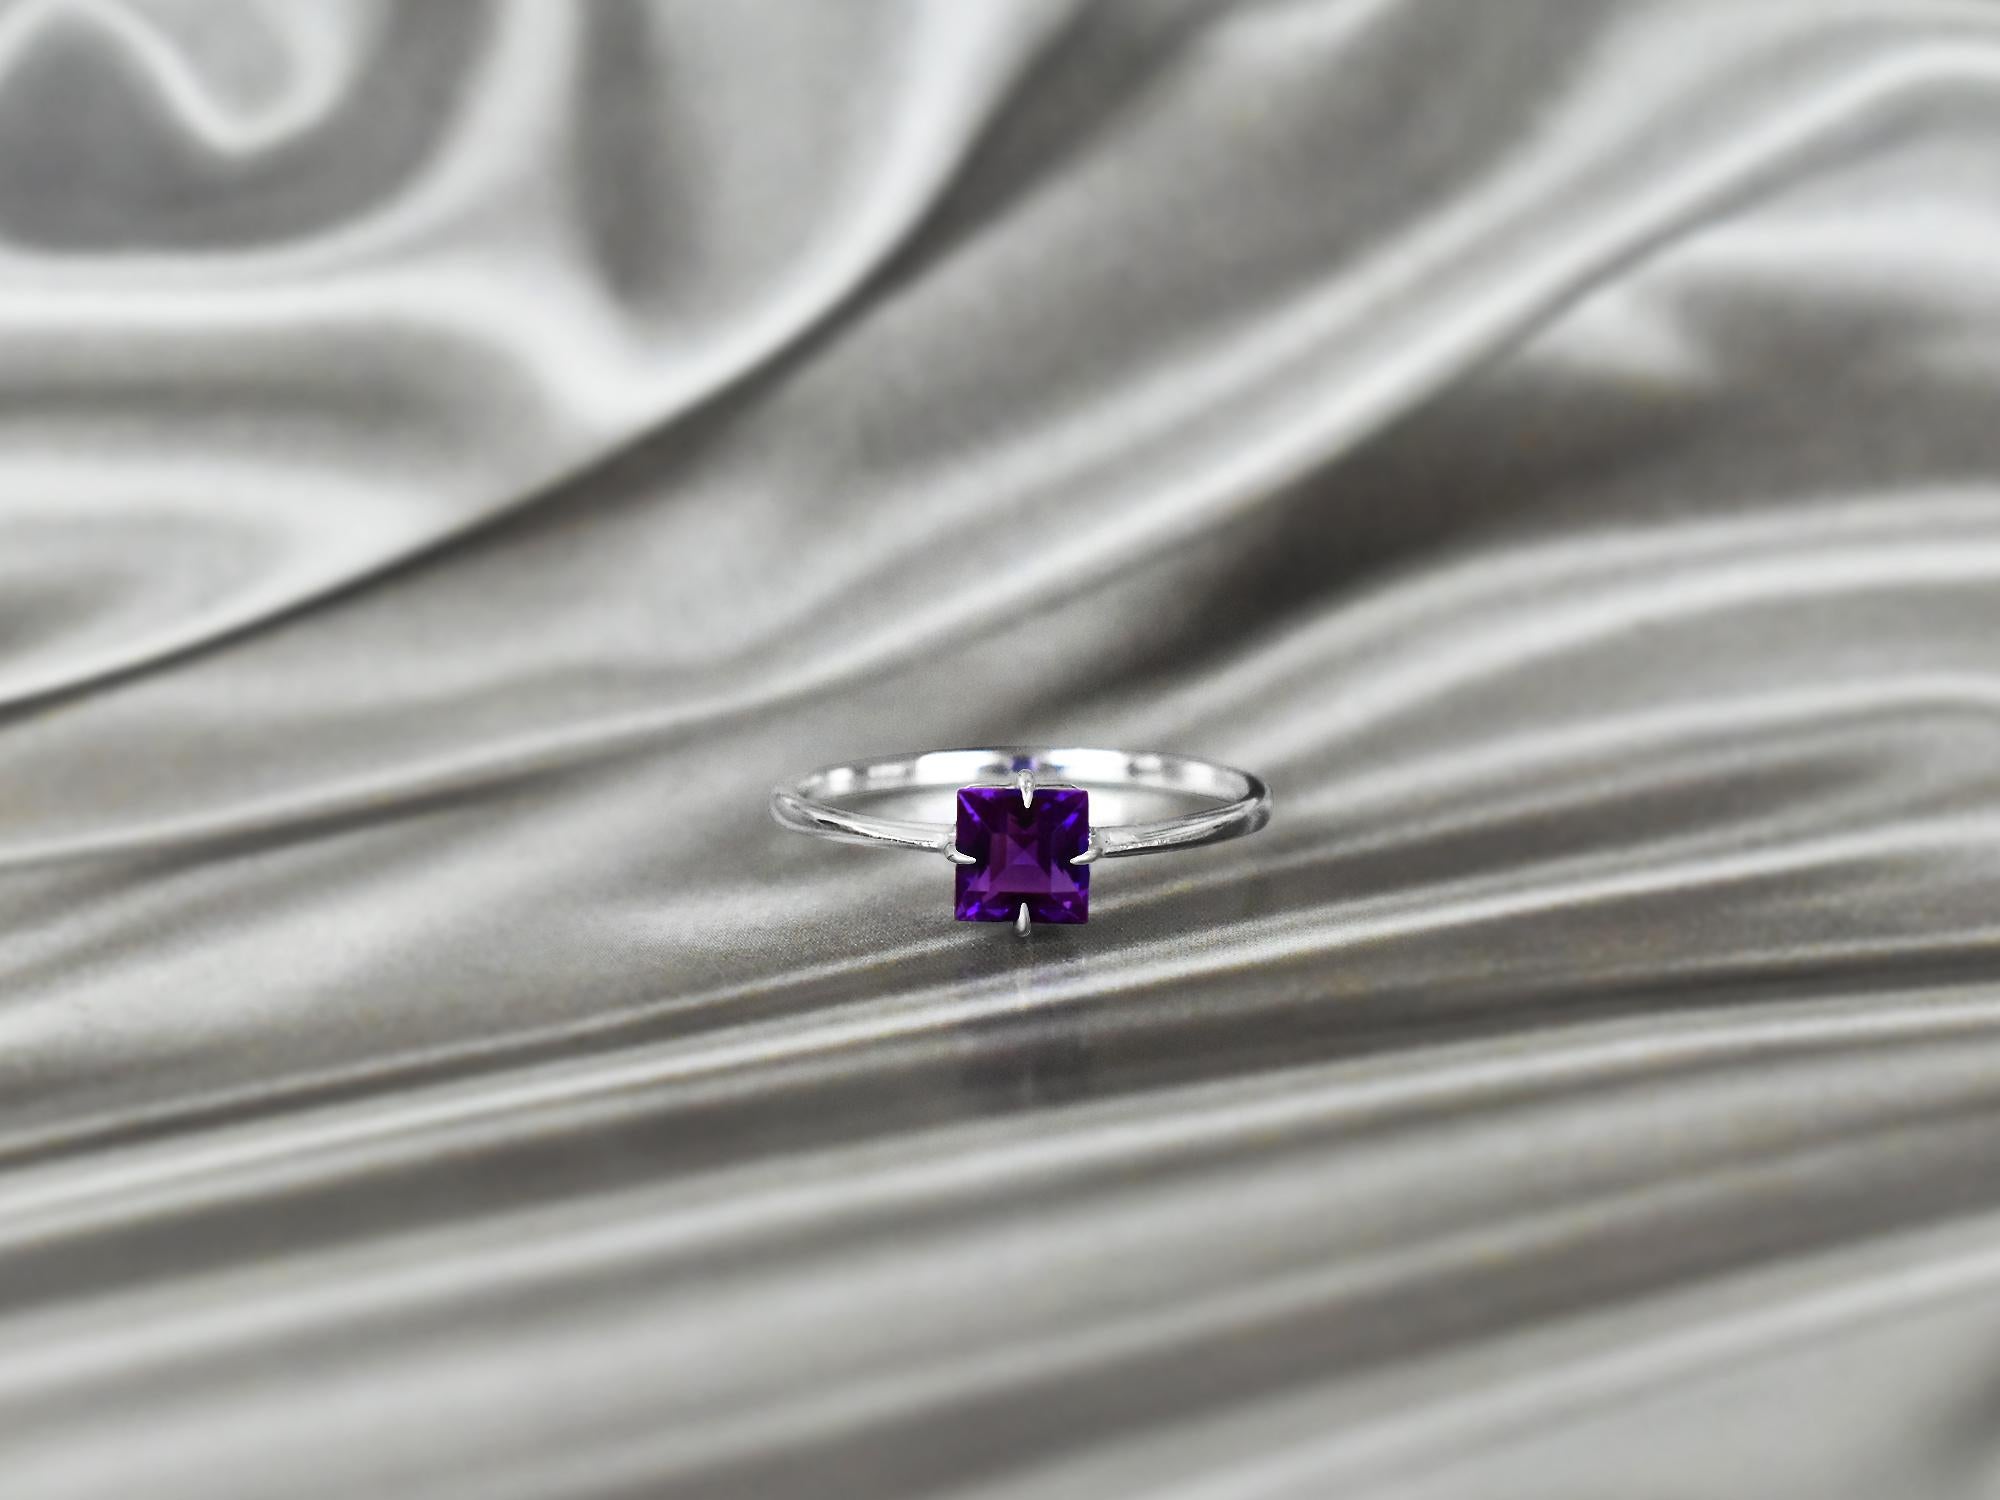 For Sale:  14k Gold Princess Cut 5x5 mm Princess Cut Gemstone Ring Gemstone Engagement Ring 4